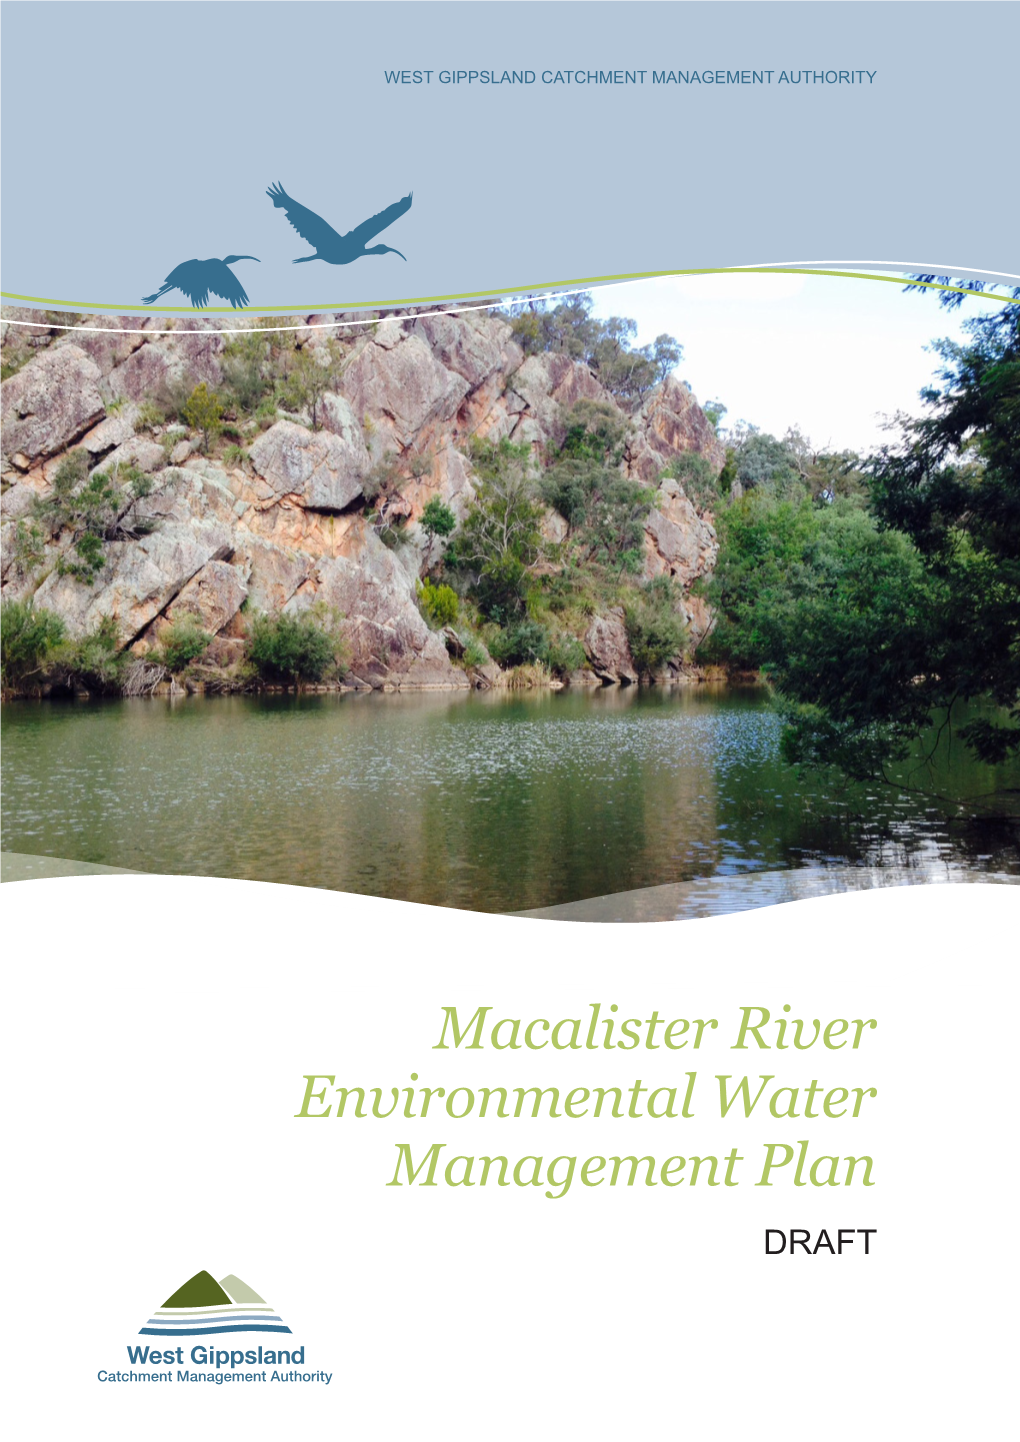 Macalister River Environmental Water Management Plan DRAFT